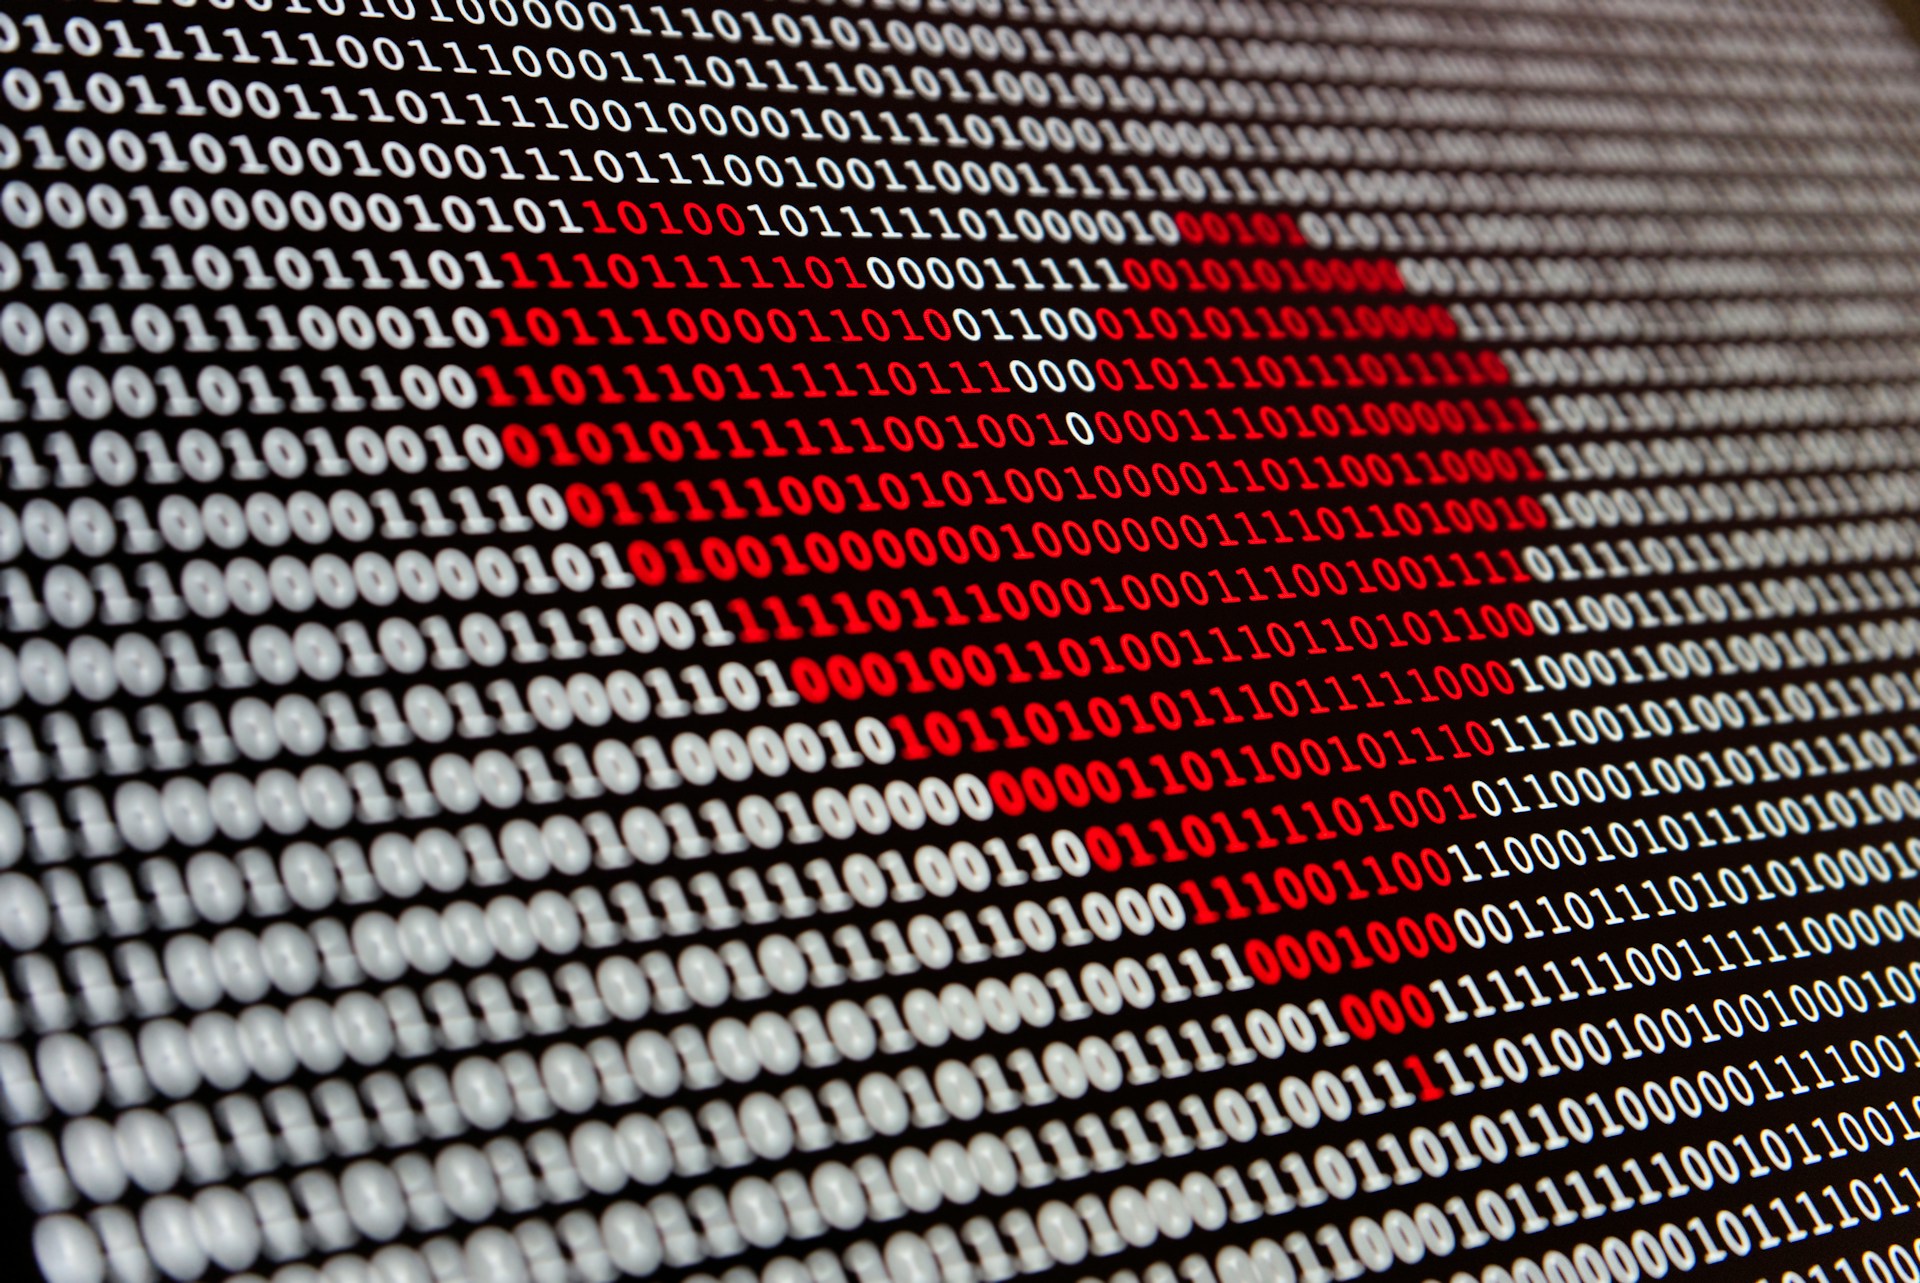 heart shaped created in binary code